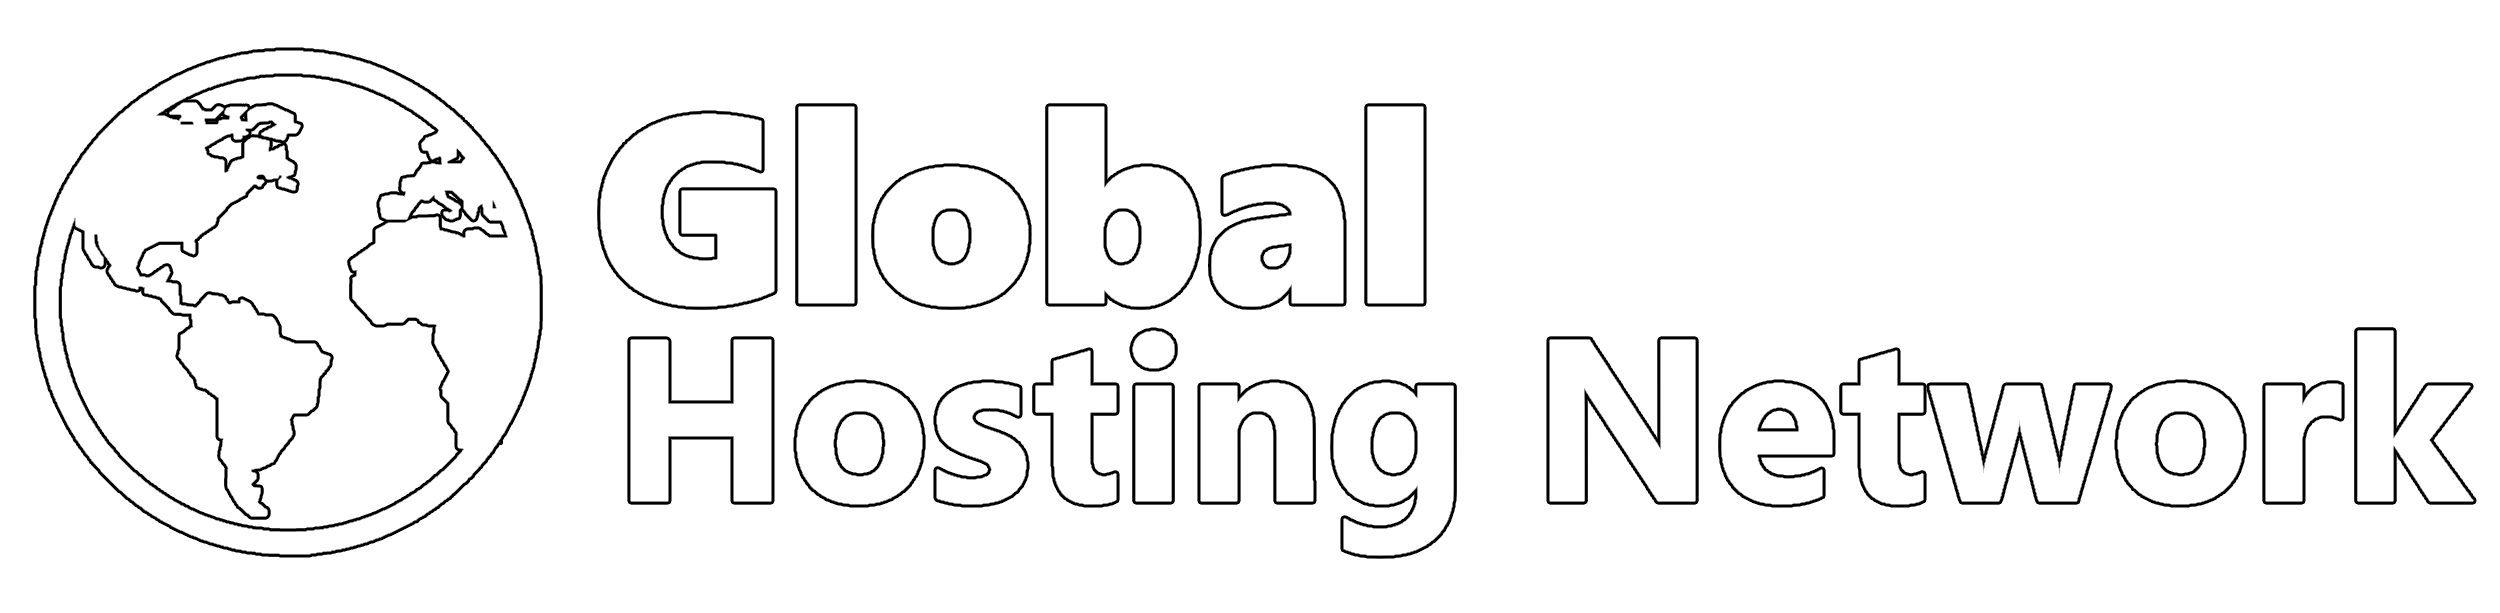 Global Hosting Network